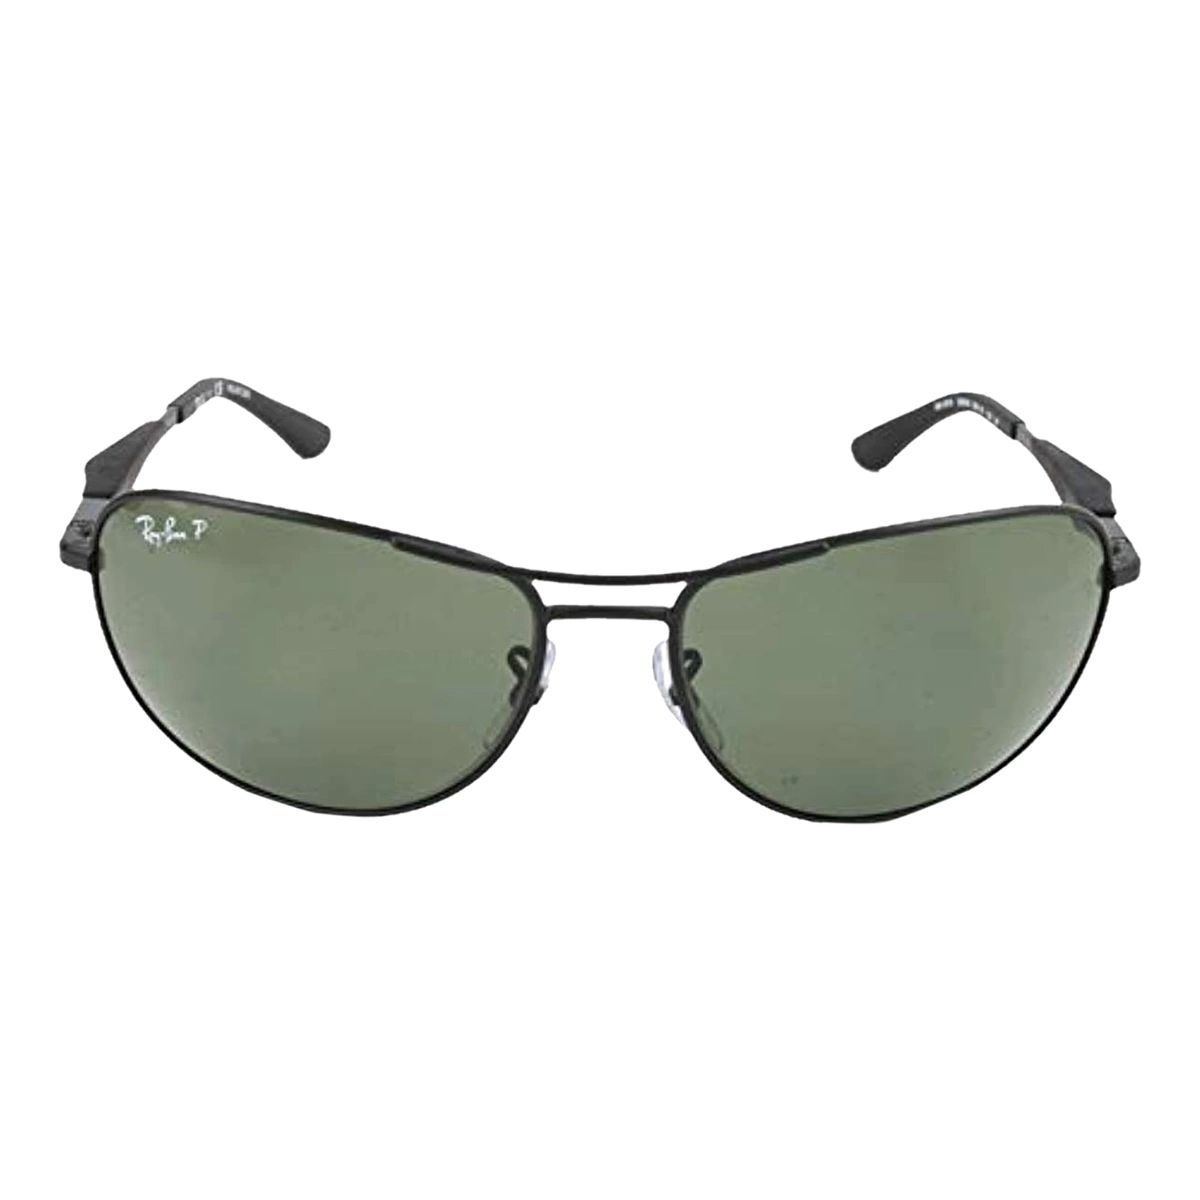 Image of Ray Ban Men's/Women's 3519 Aviator Sunglasses Polarized